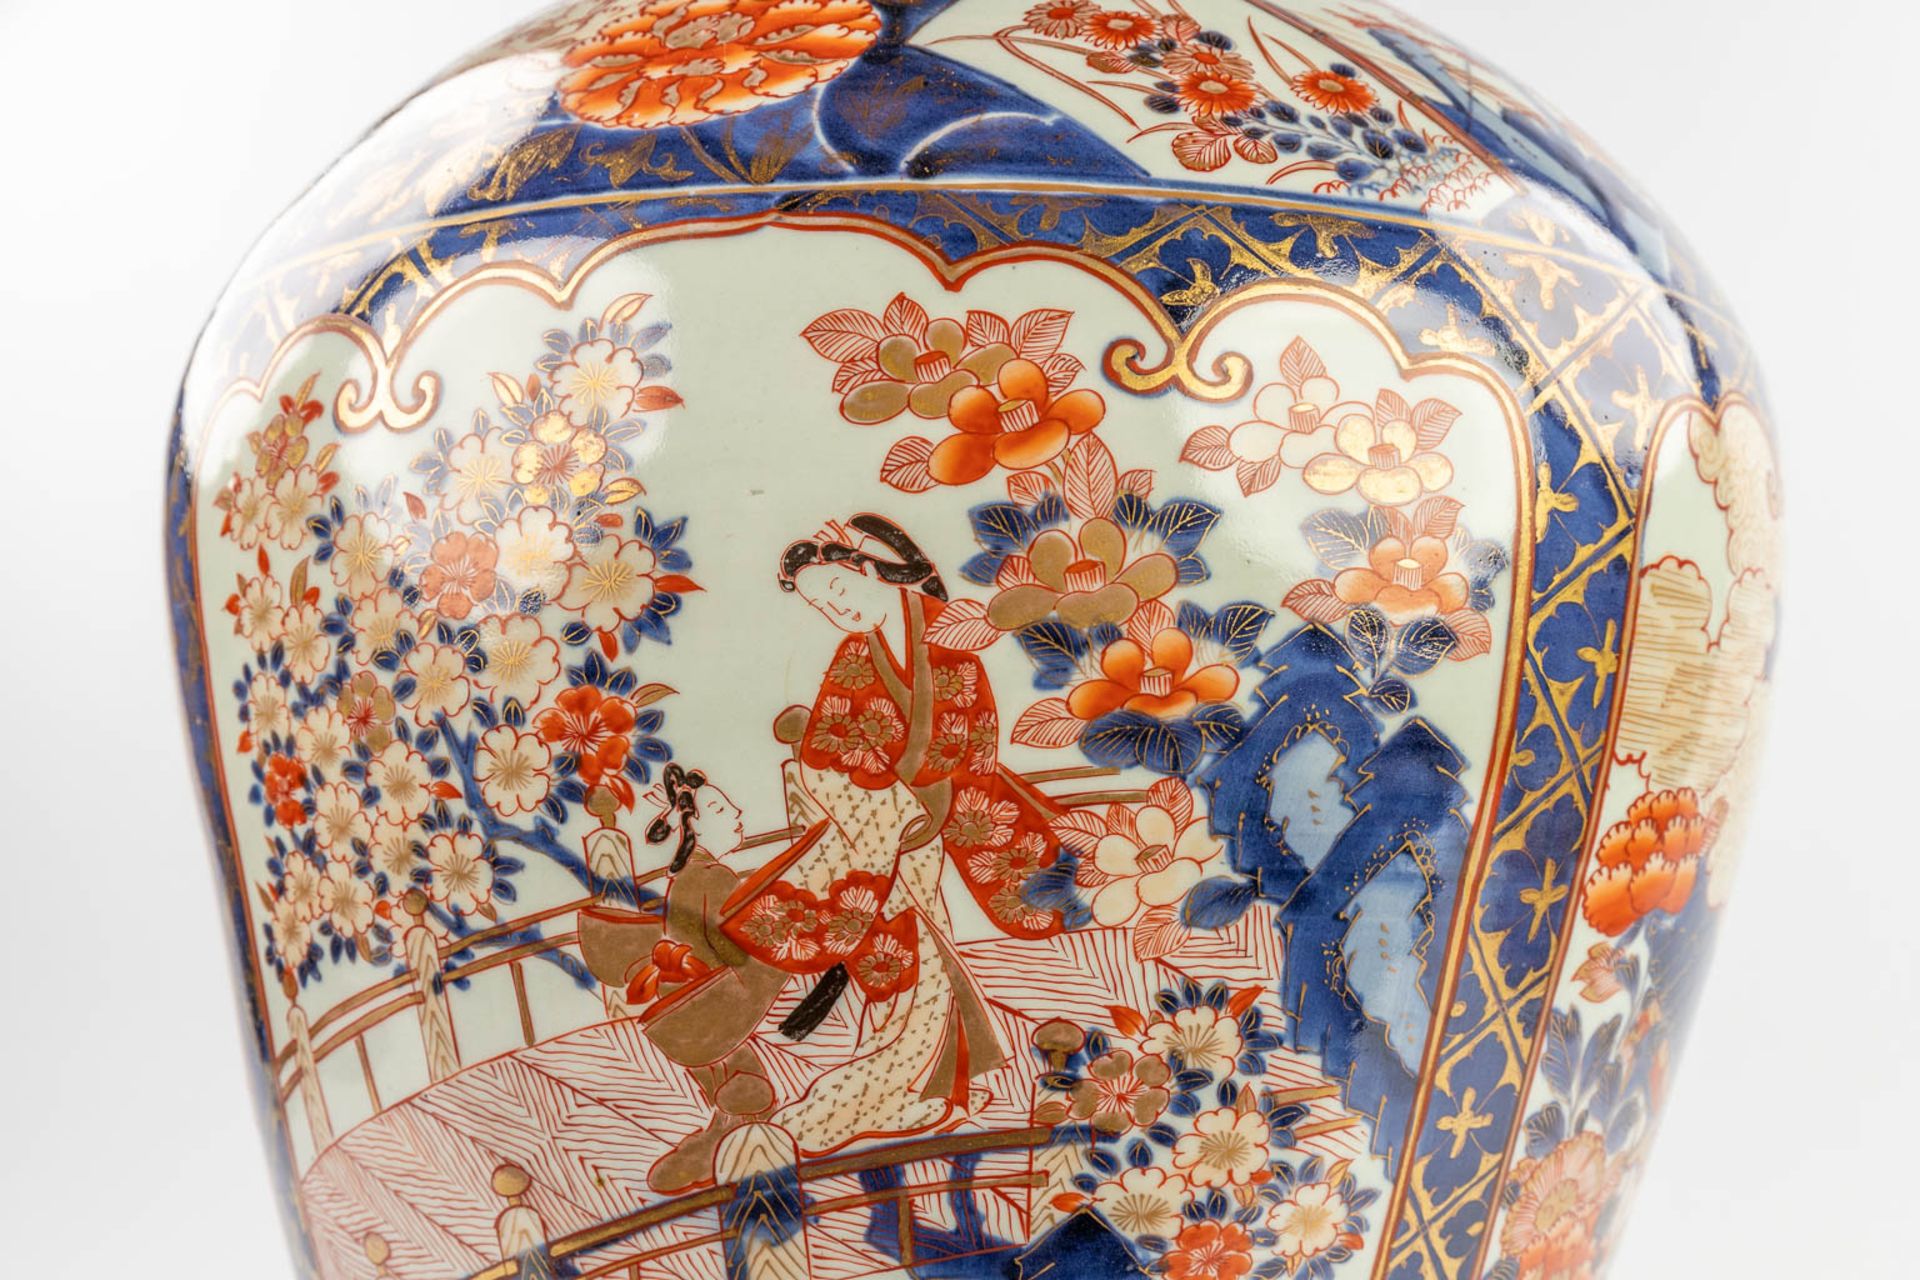 A large vase with lid, Imari porcelain, 19th century. (H: 87 x D: 39 cm) - Image 12 of 15